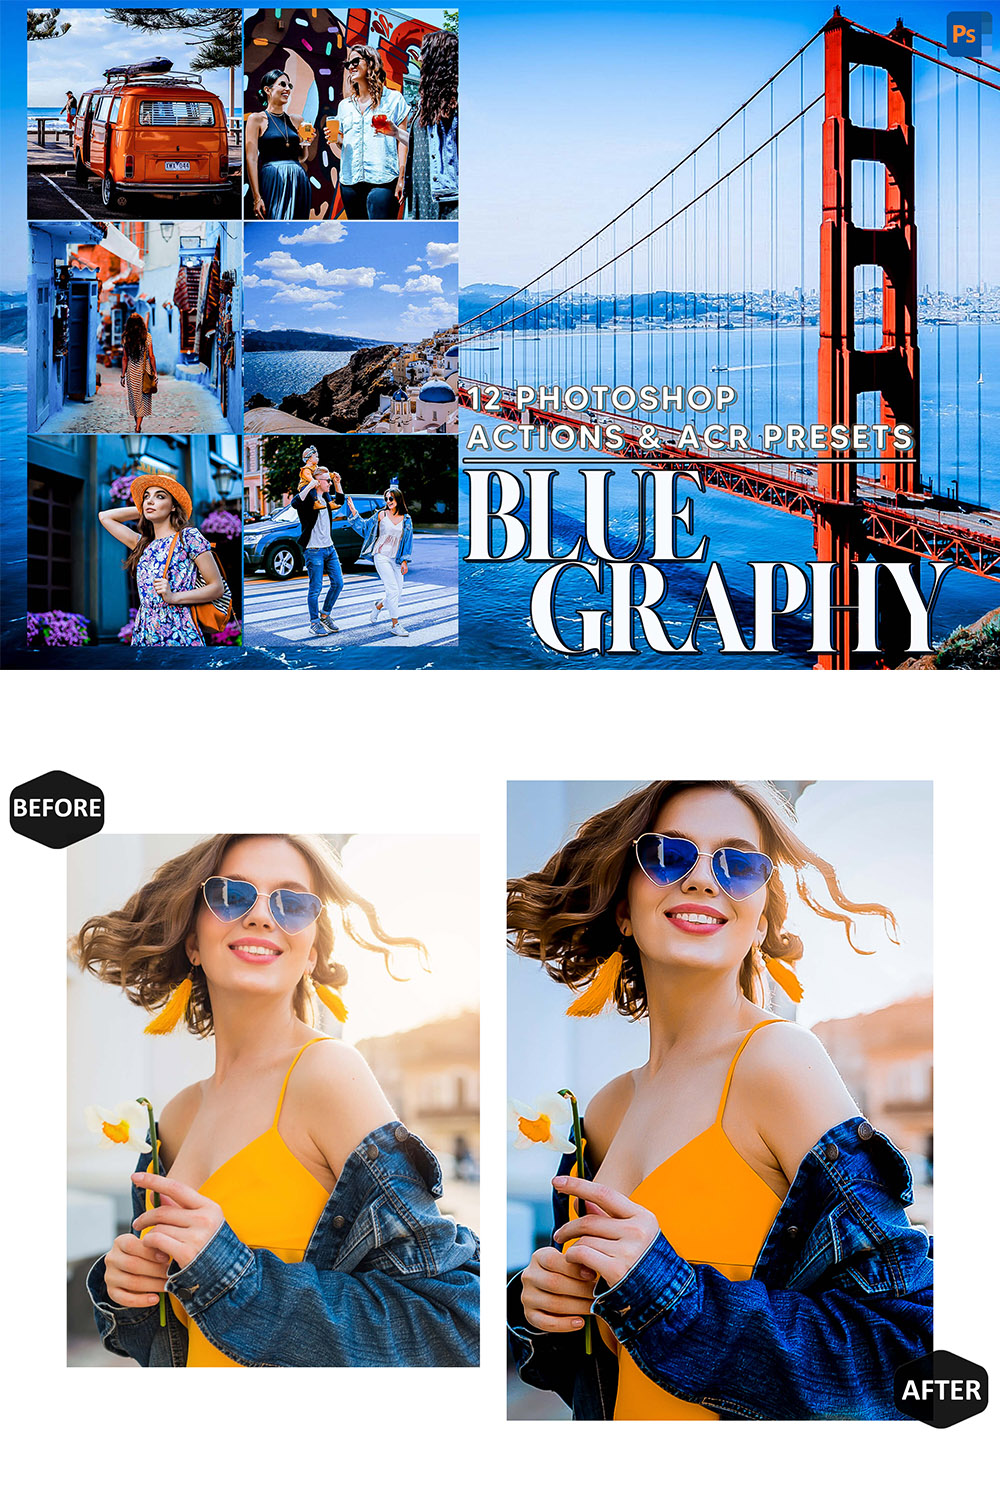 12 Photoshop Actions, Blue Graphy Ps Action, Bluish ACR Preset, Landscape Ps Filter, Atn Portrait And Lifestyle Theme For Instagram, Blogger pinterest preview image.